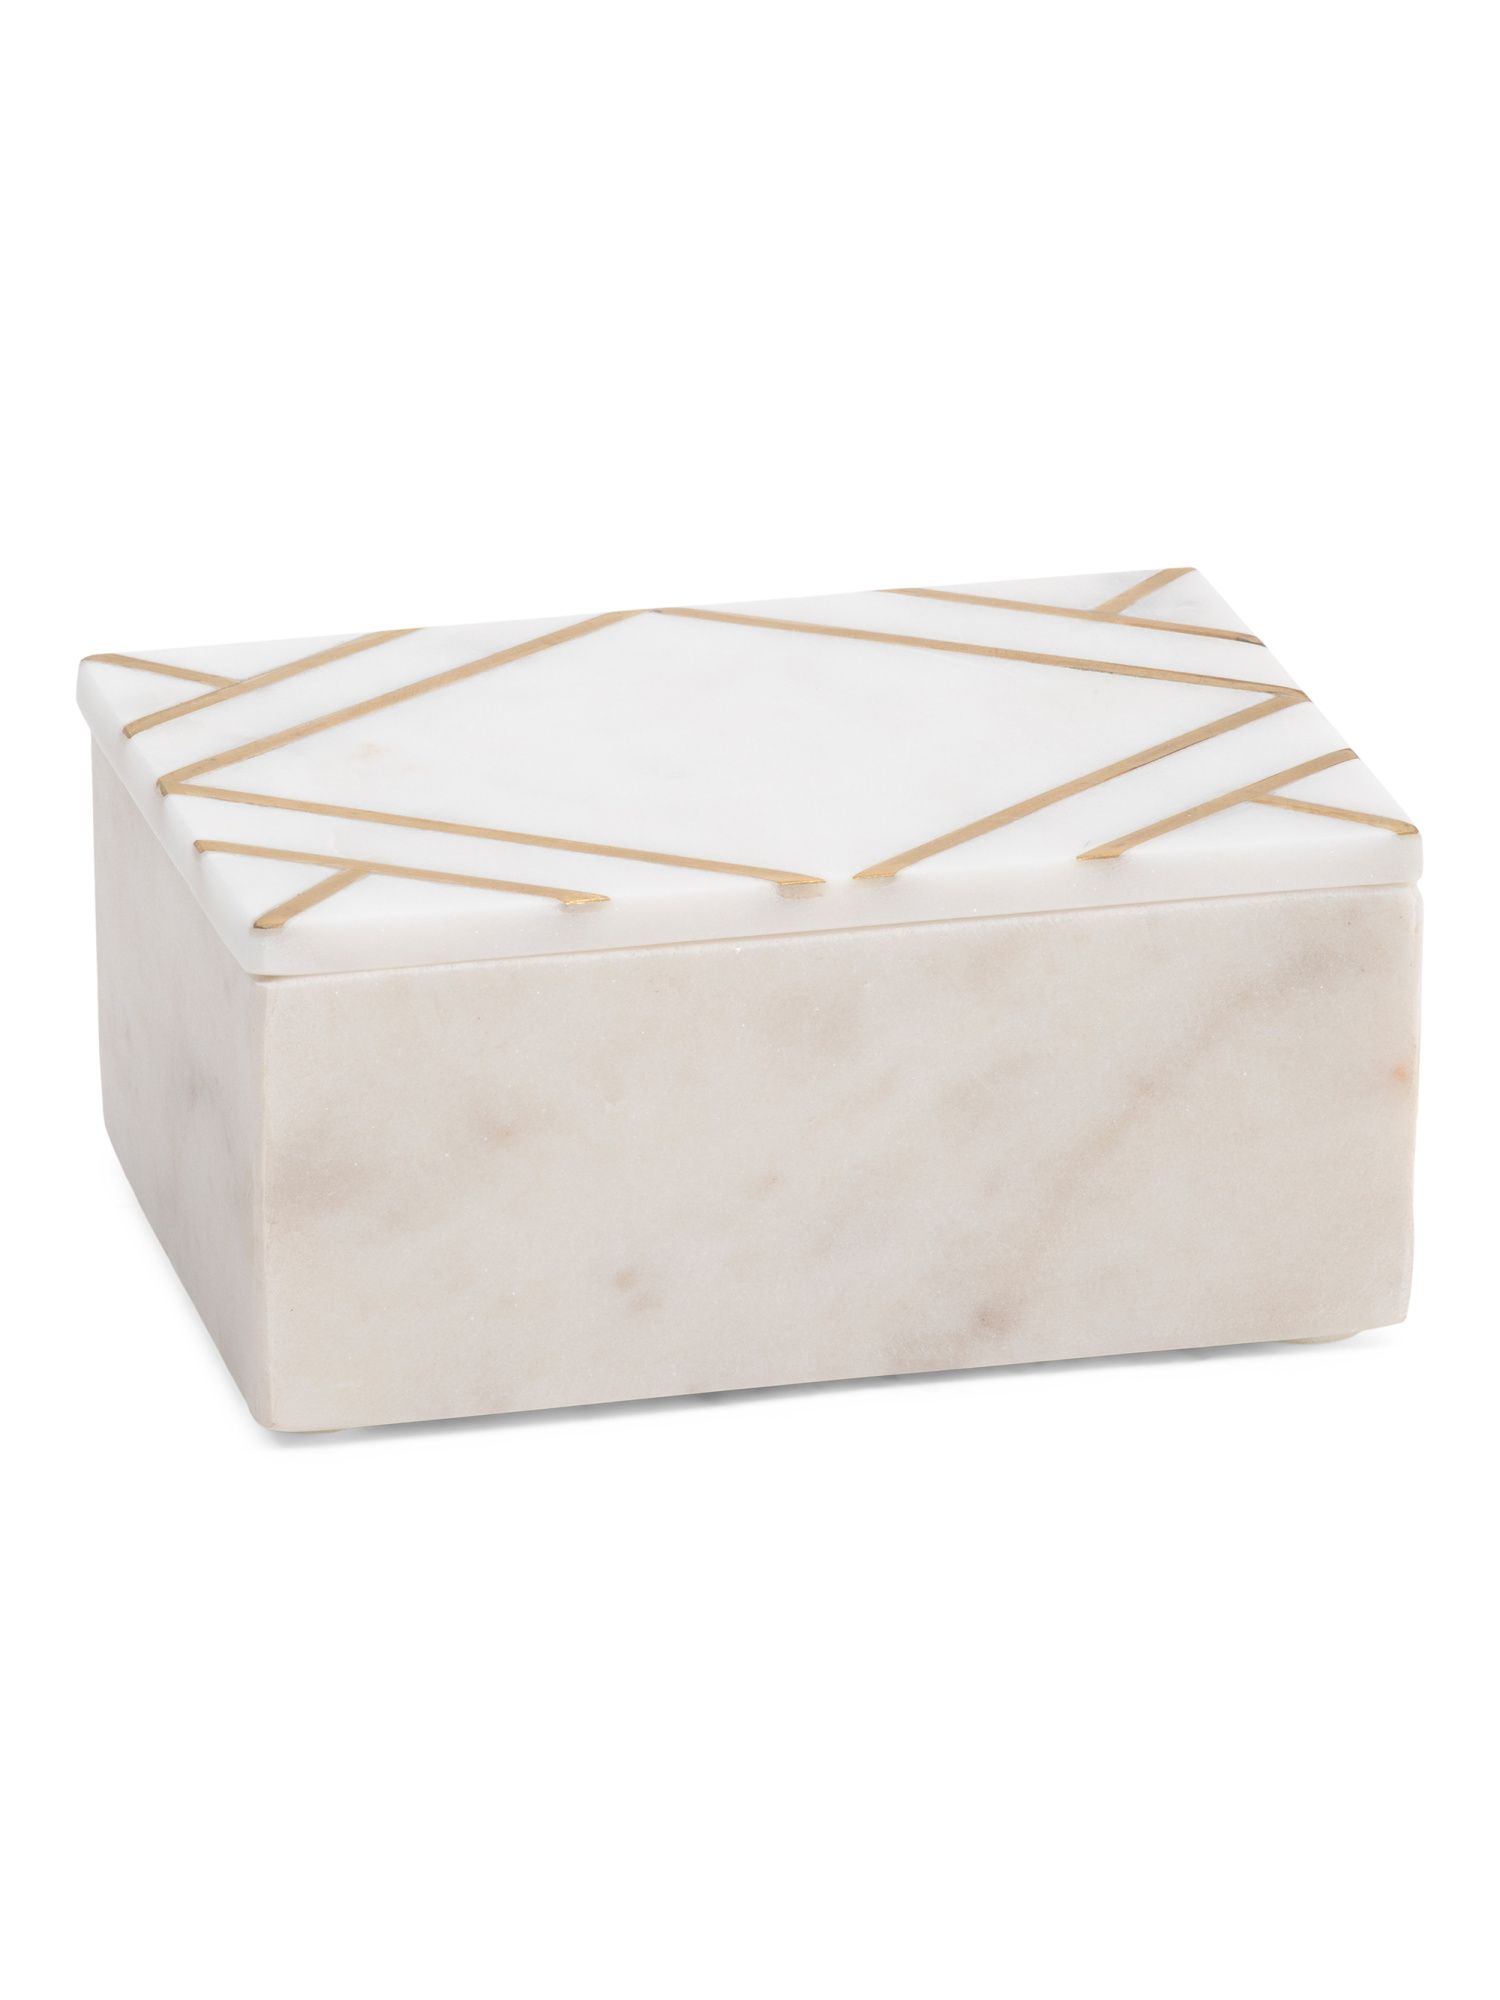 Marble Rectangular Box With Gold Tone Inlay | Baskets & Storage | Marshalls | Marshalls